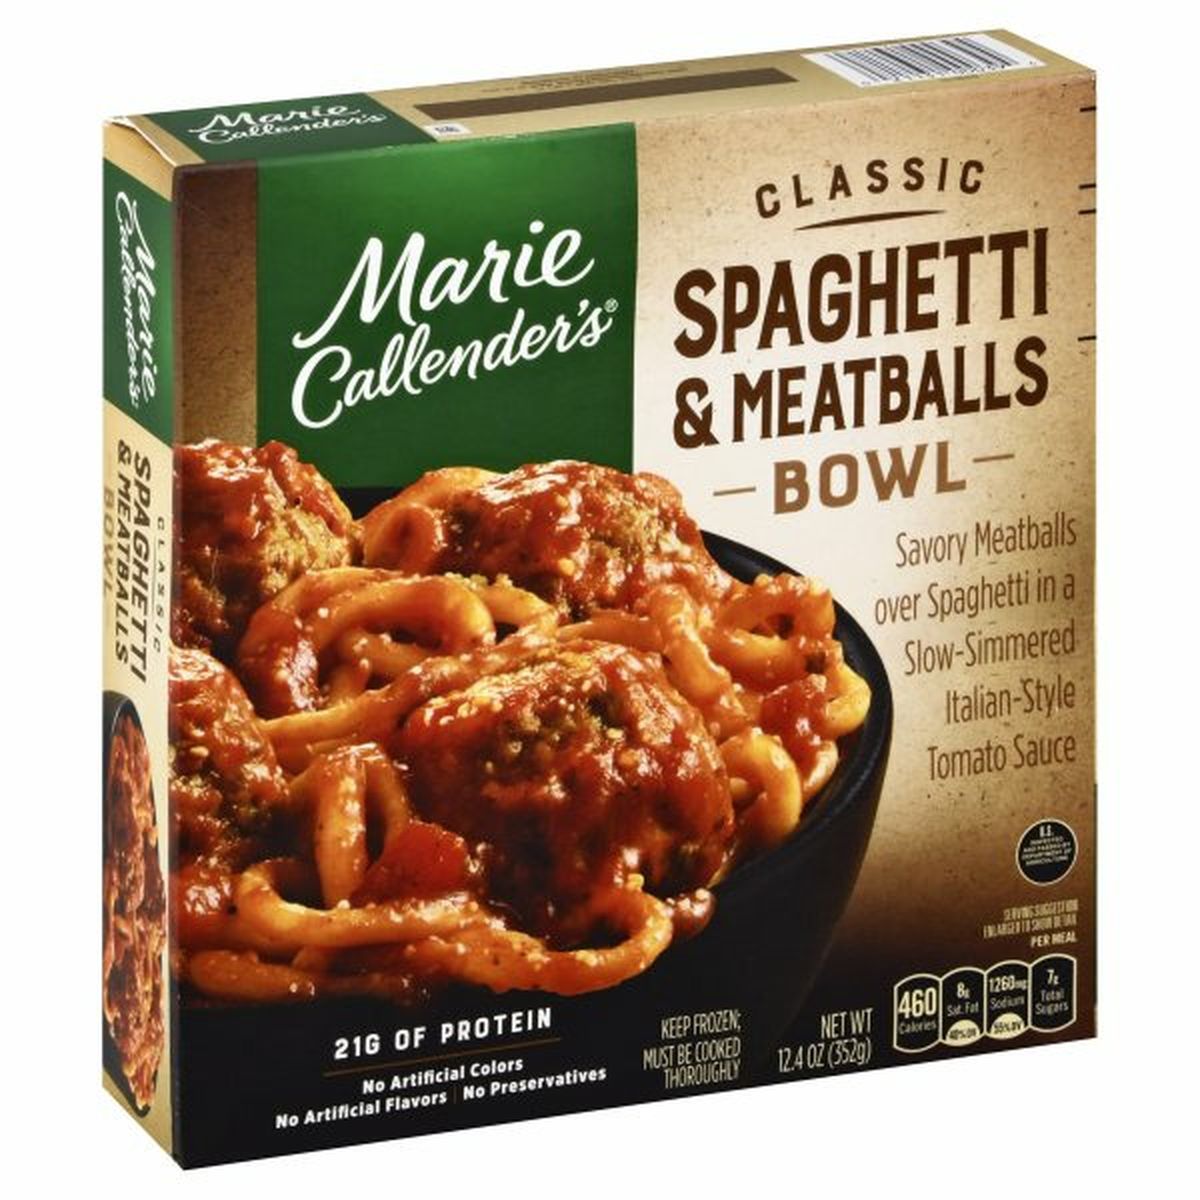 Calories in Marie Callender's Spaghetti & Meatballs Bowls, Classic